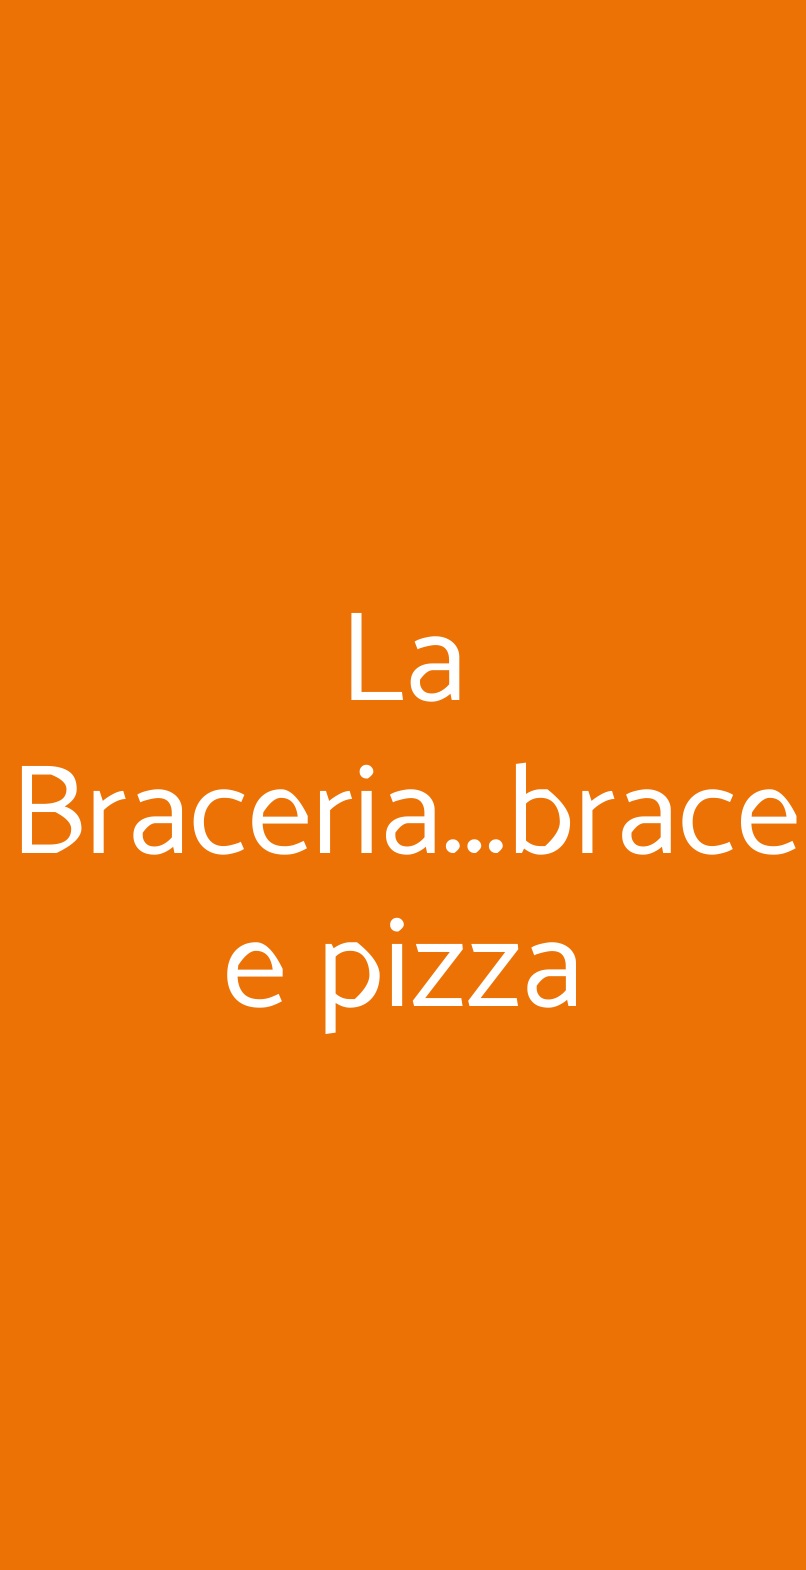 La Braceria...brace e pizza Catania menù 1 pagina